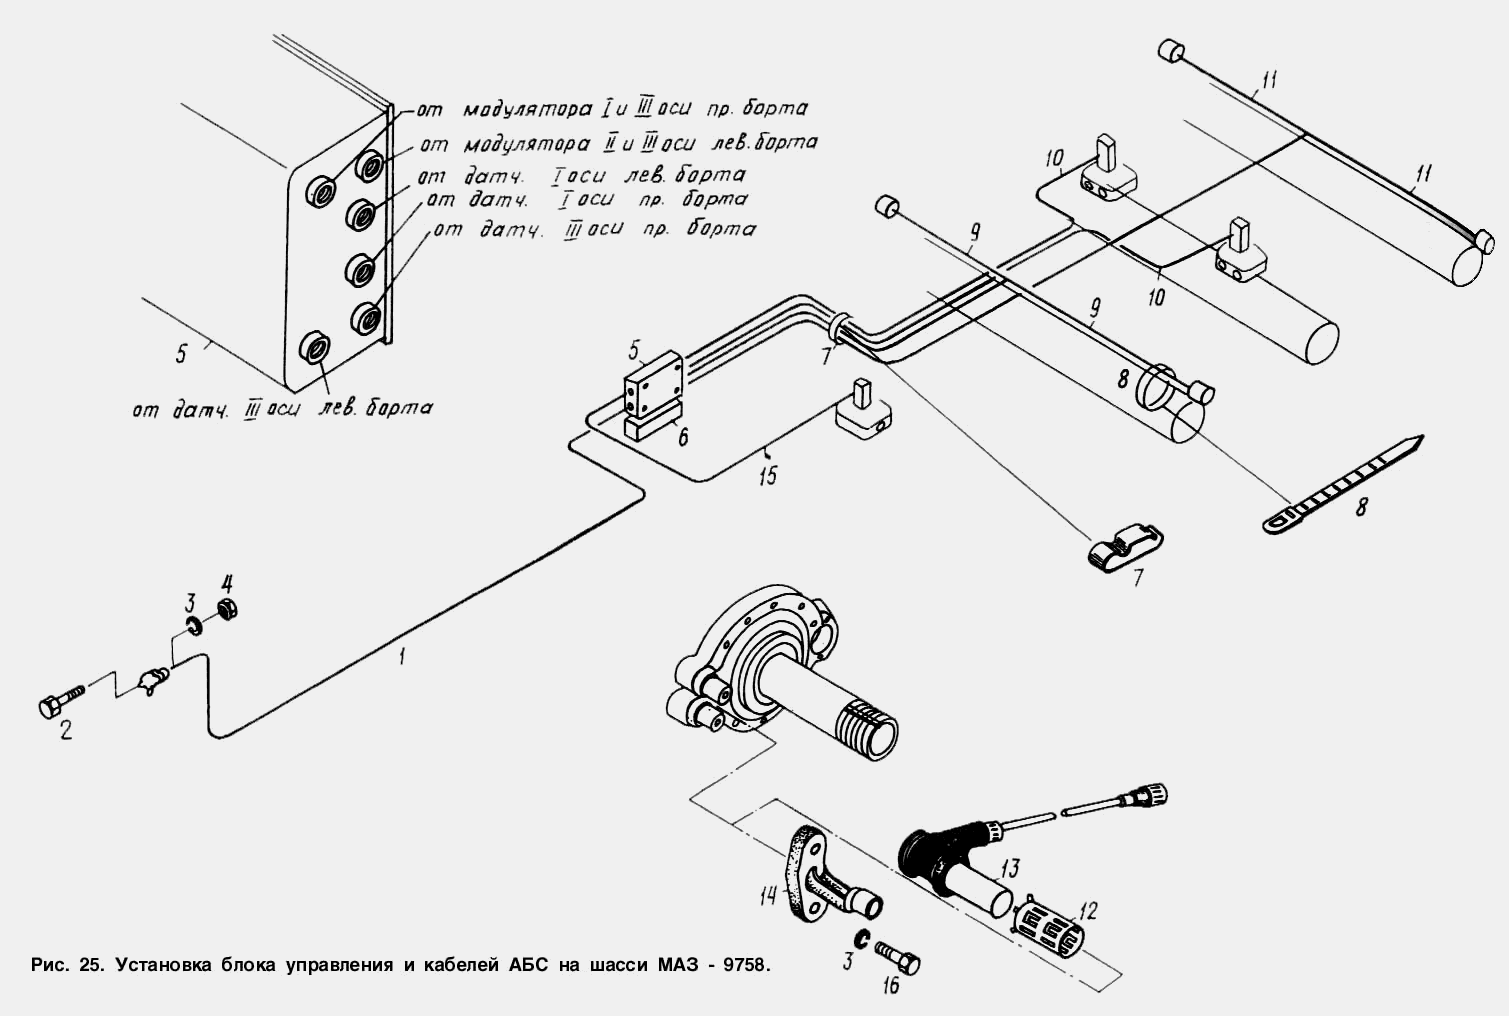 Установка блока управления и кабелей АБС на шасси МАЗ-9758 МАЗ  9758